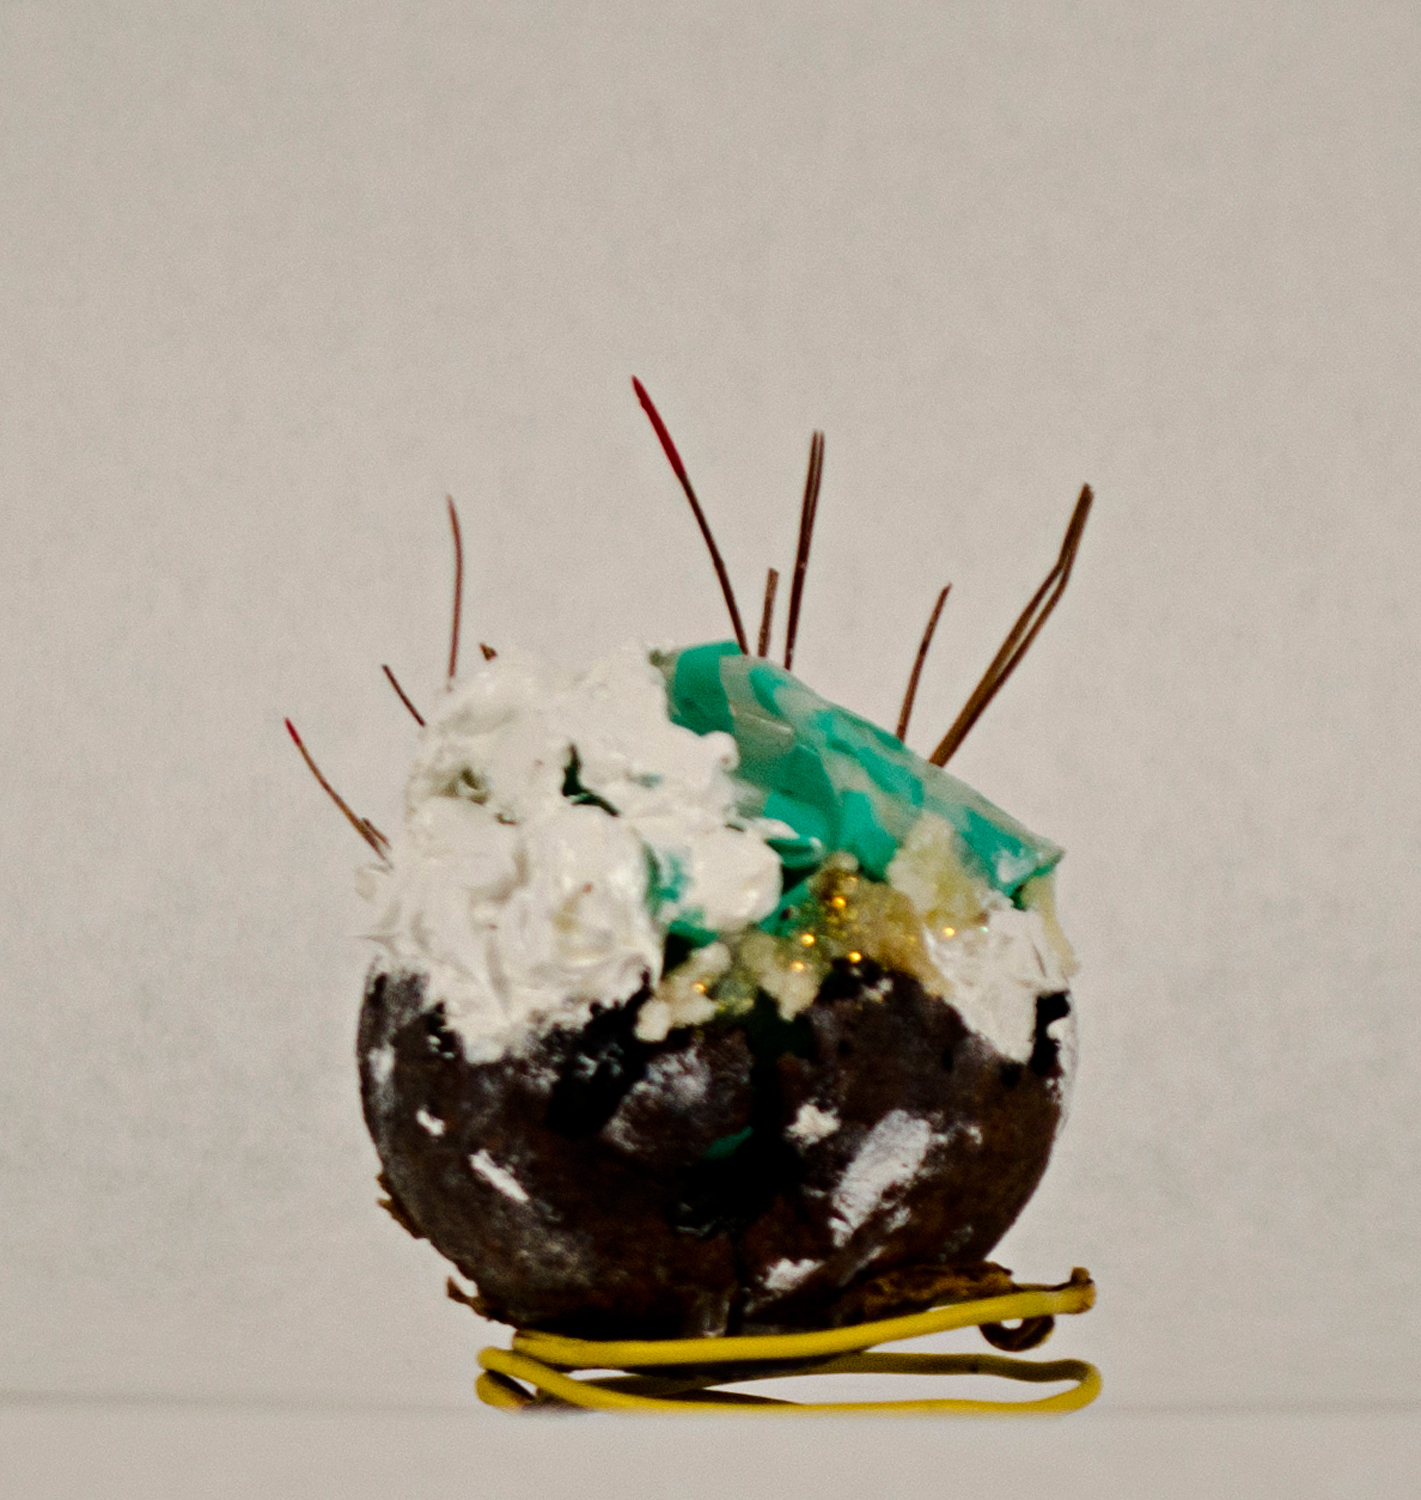 Jessica Lund, cupcake, 2014. Walnut, paint, plastic, pine needles, glitter, found wire, 4 x 3 x 3 in.